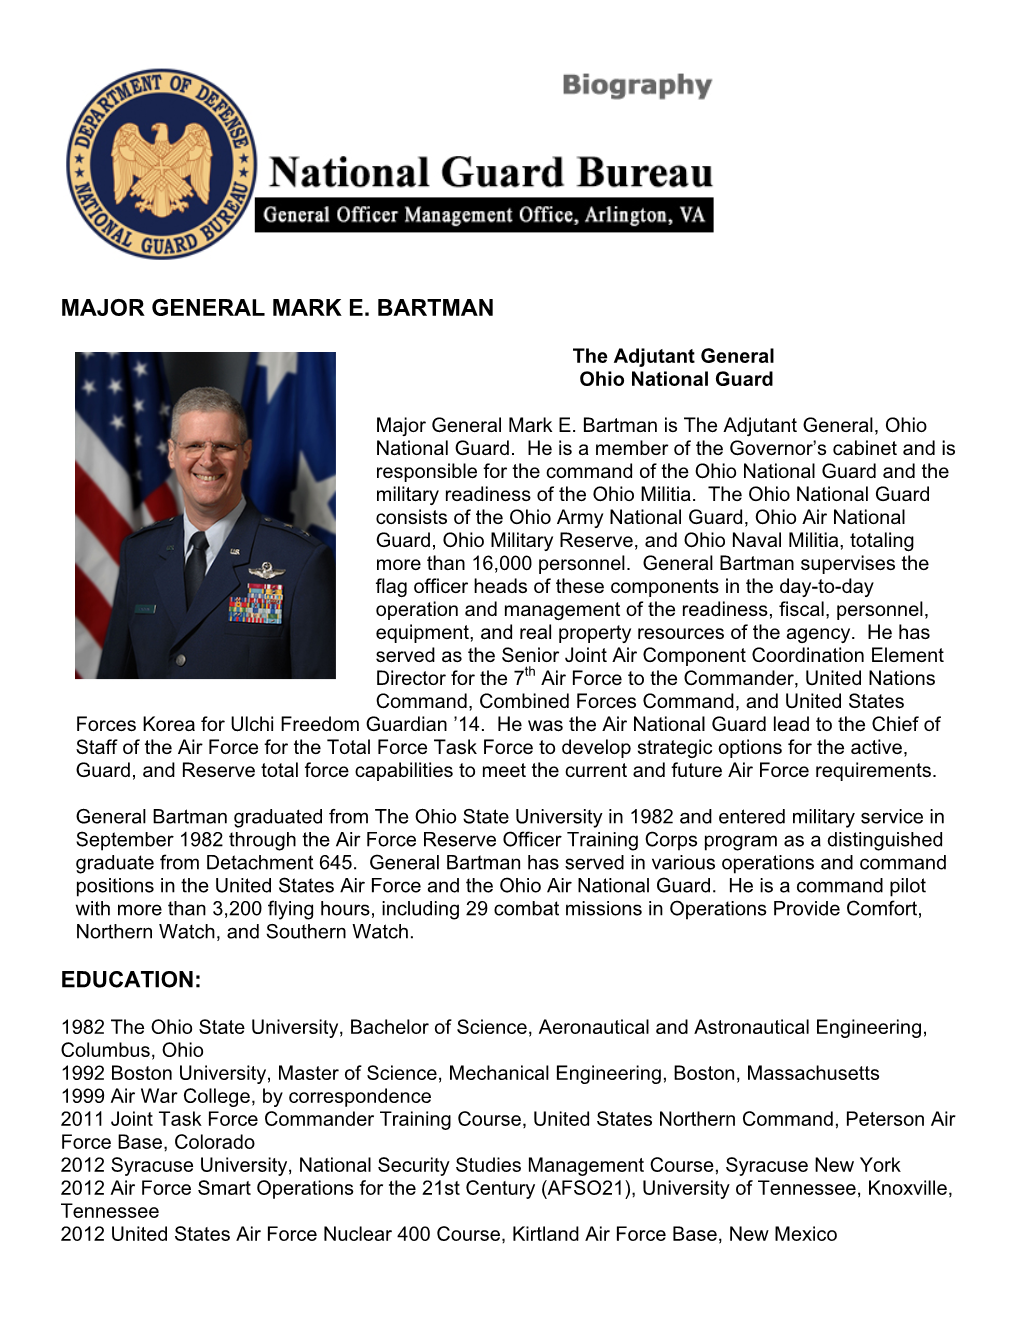 Major General Mark E. Bartman Education